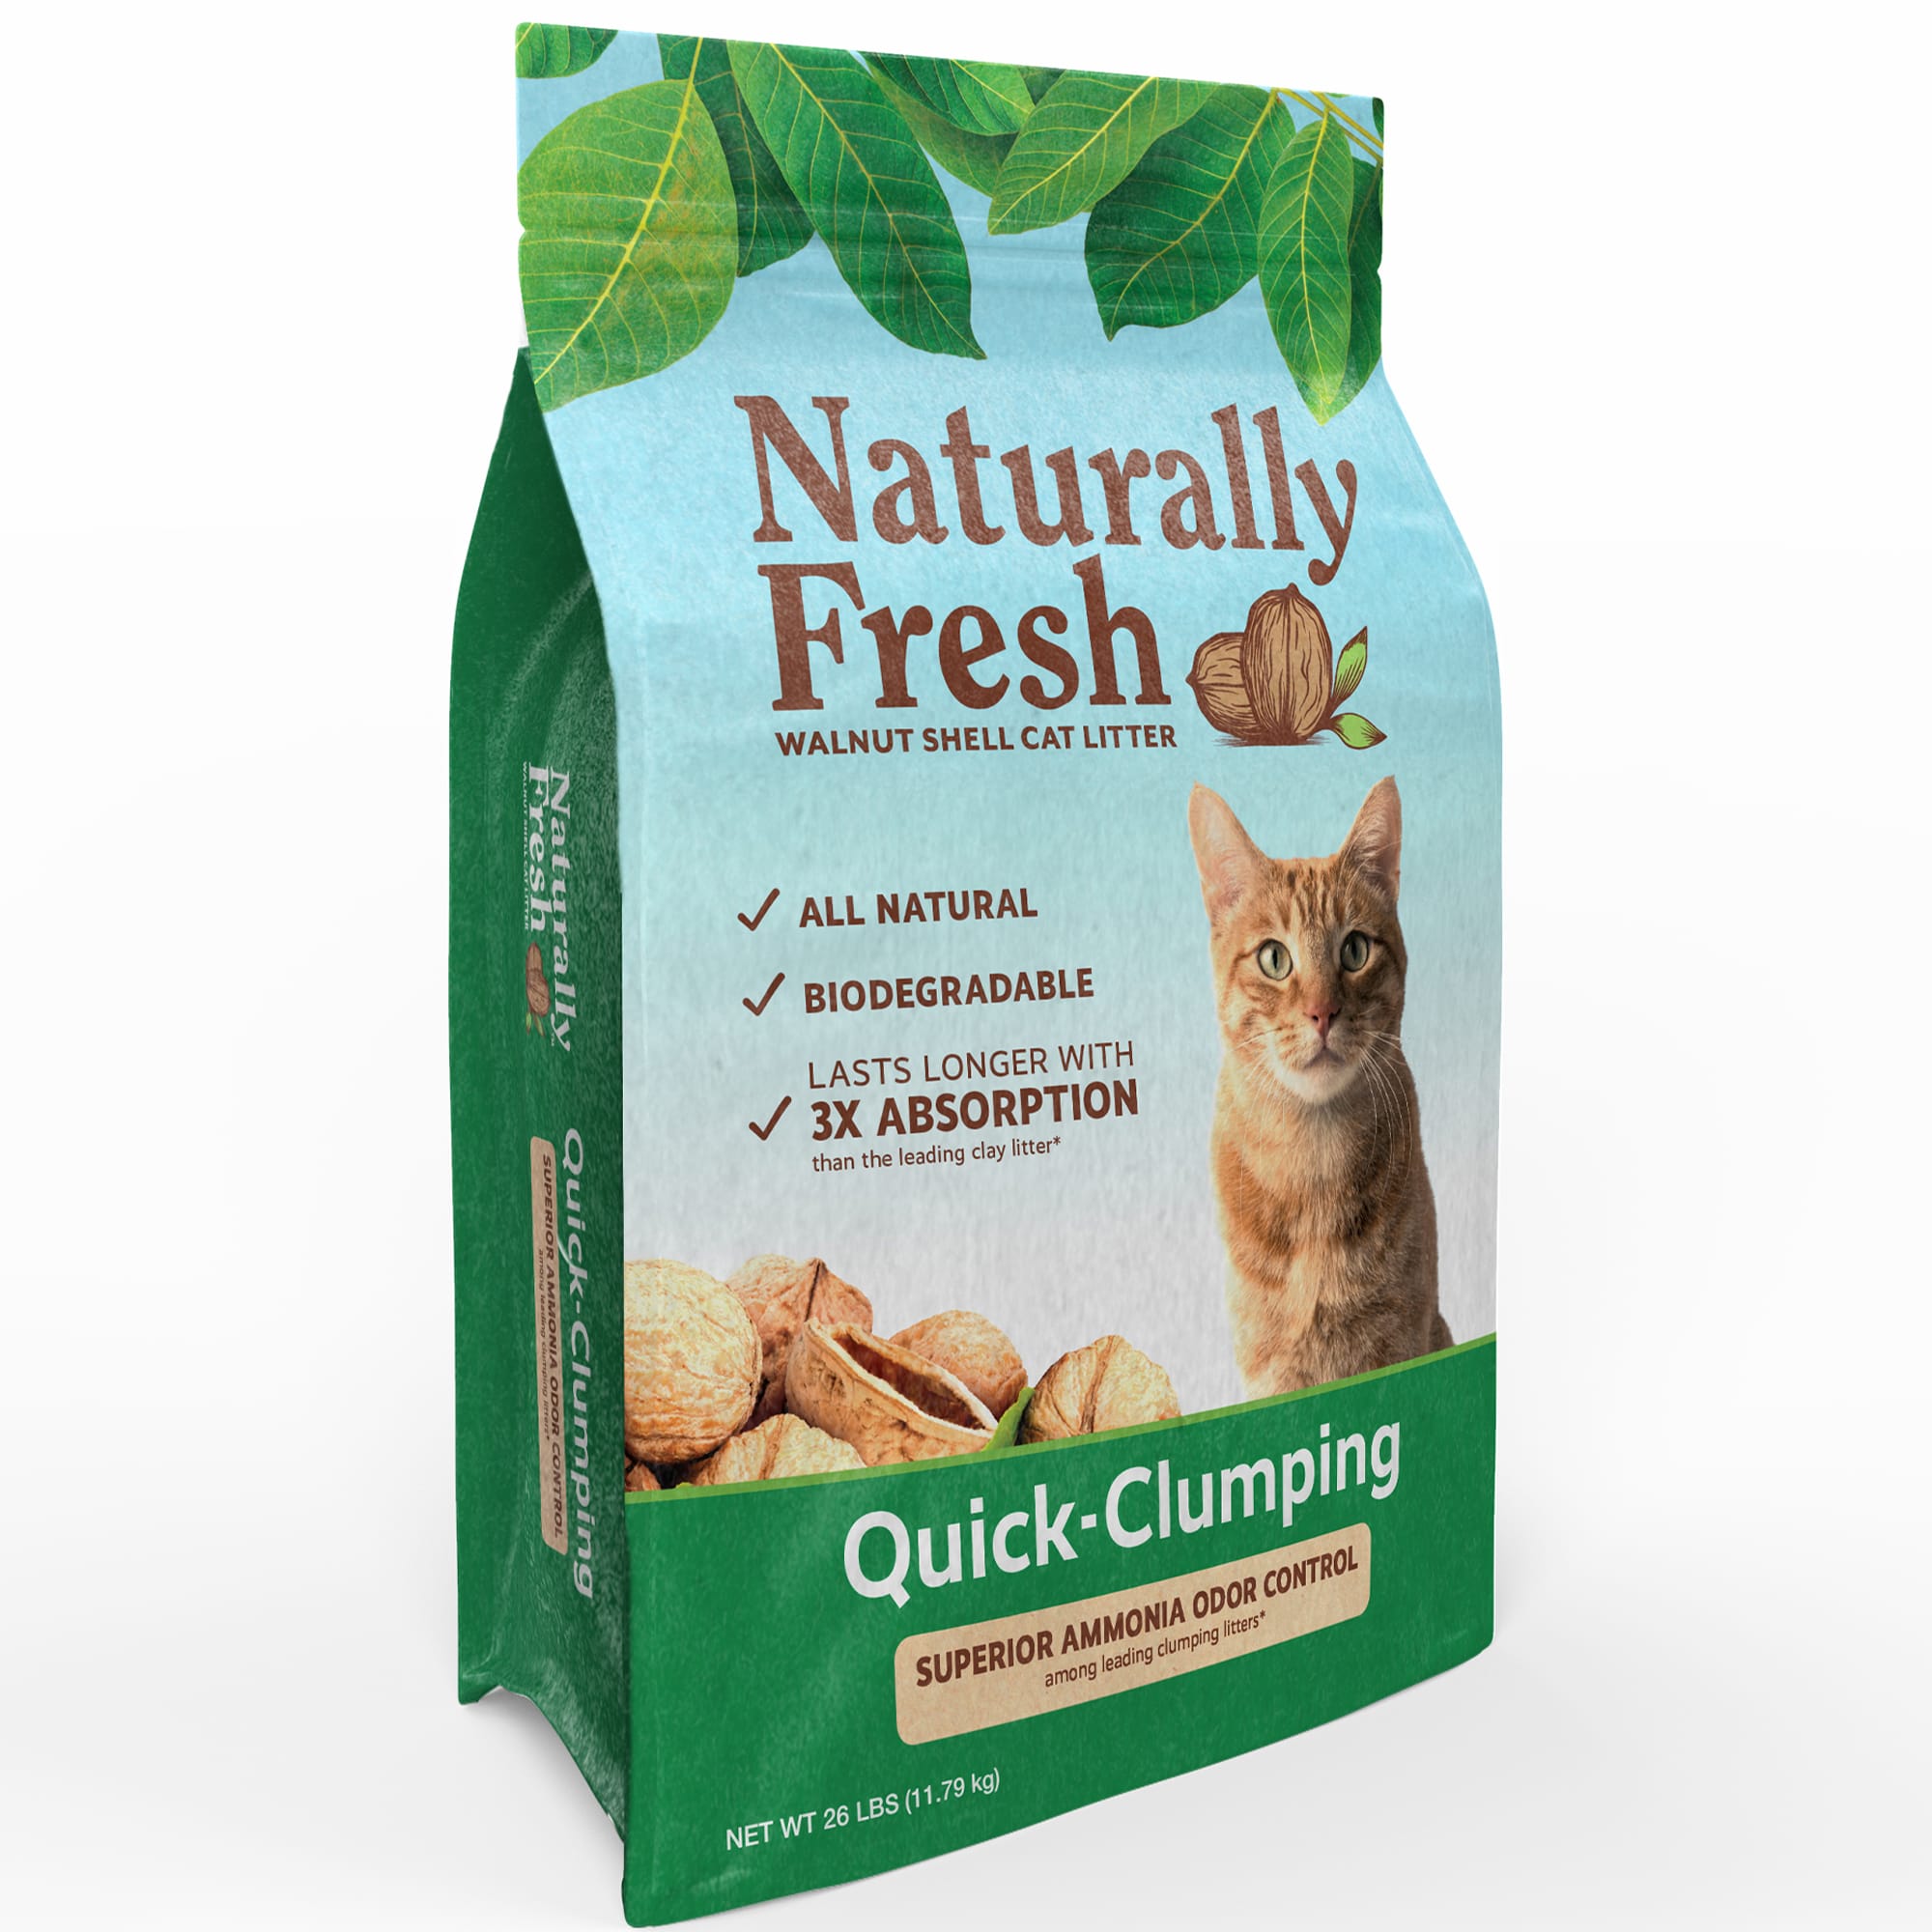 Naturally Fresh QuickClumping Natural Cat Litter eBay